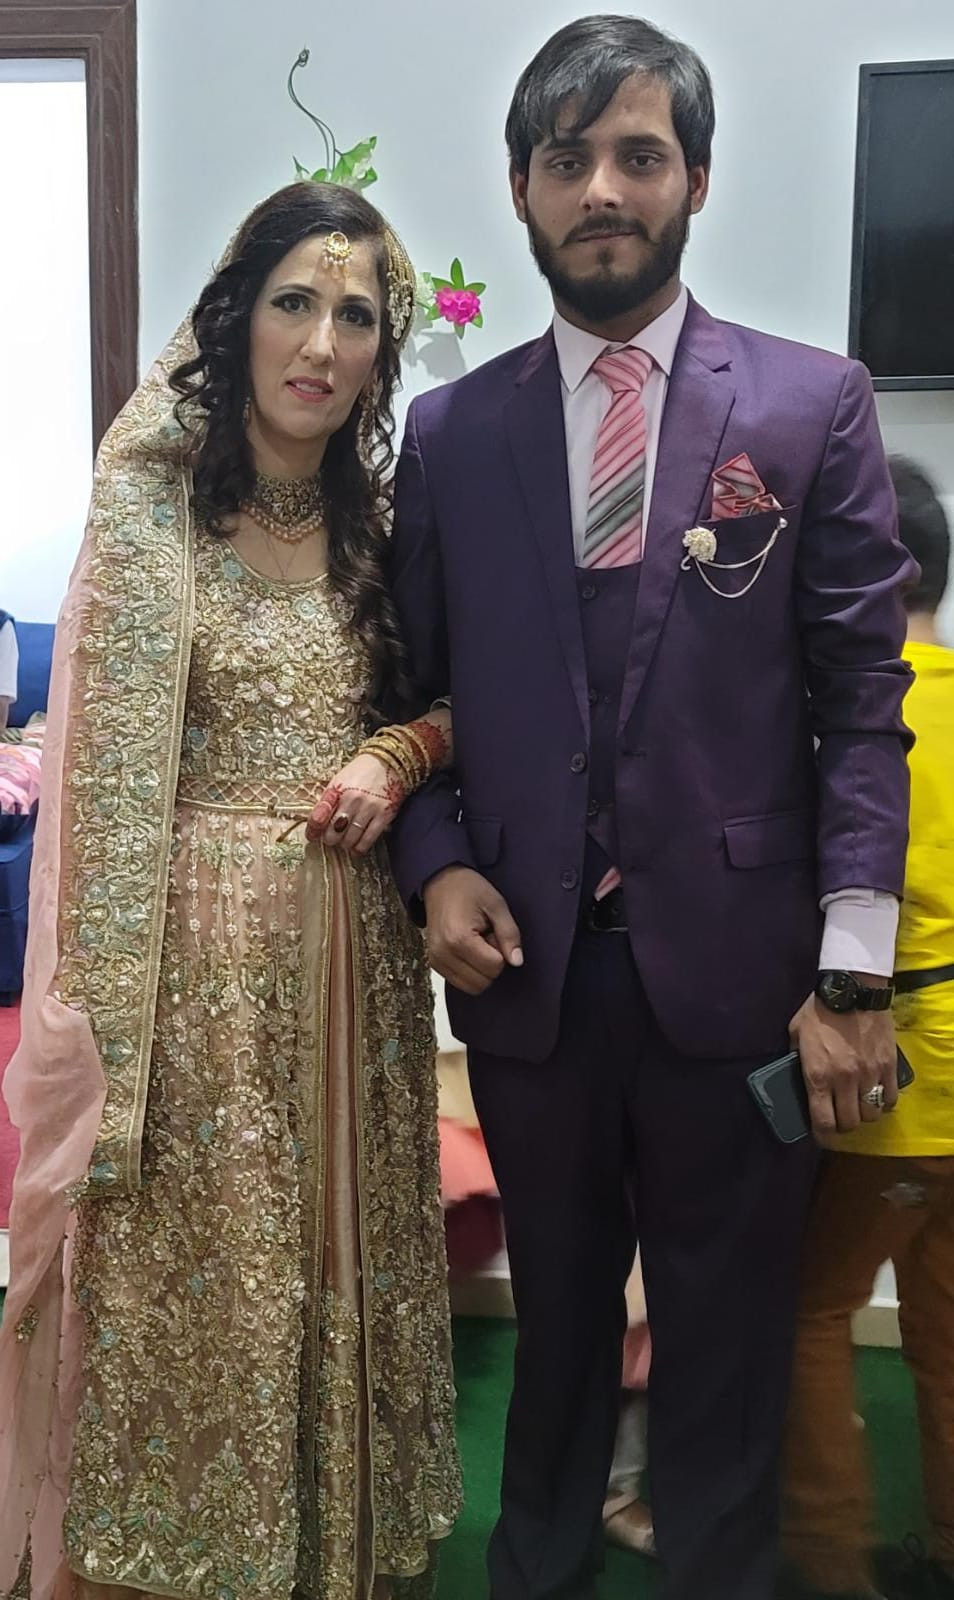 Woman marrying a pakistani No citizenship